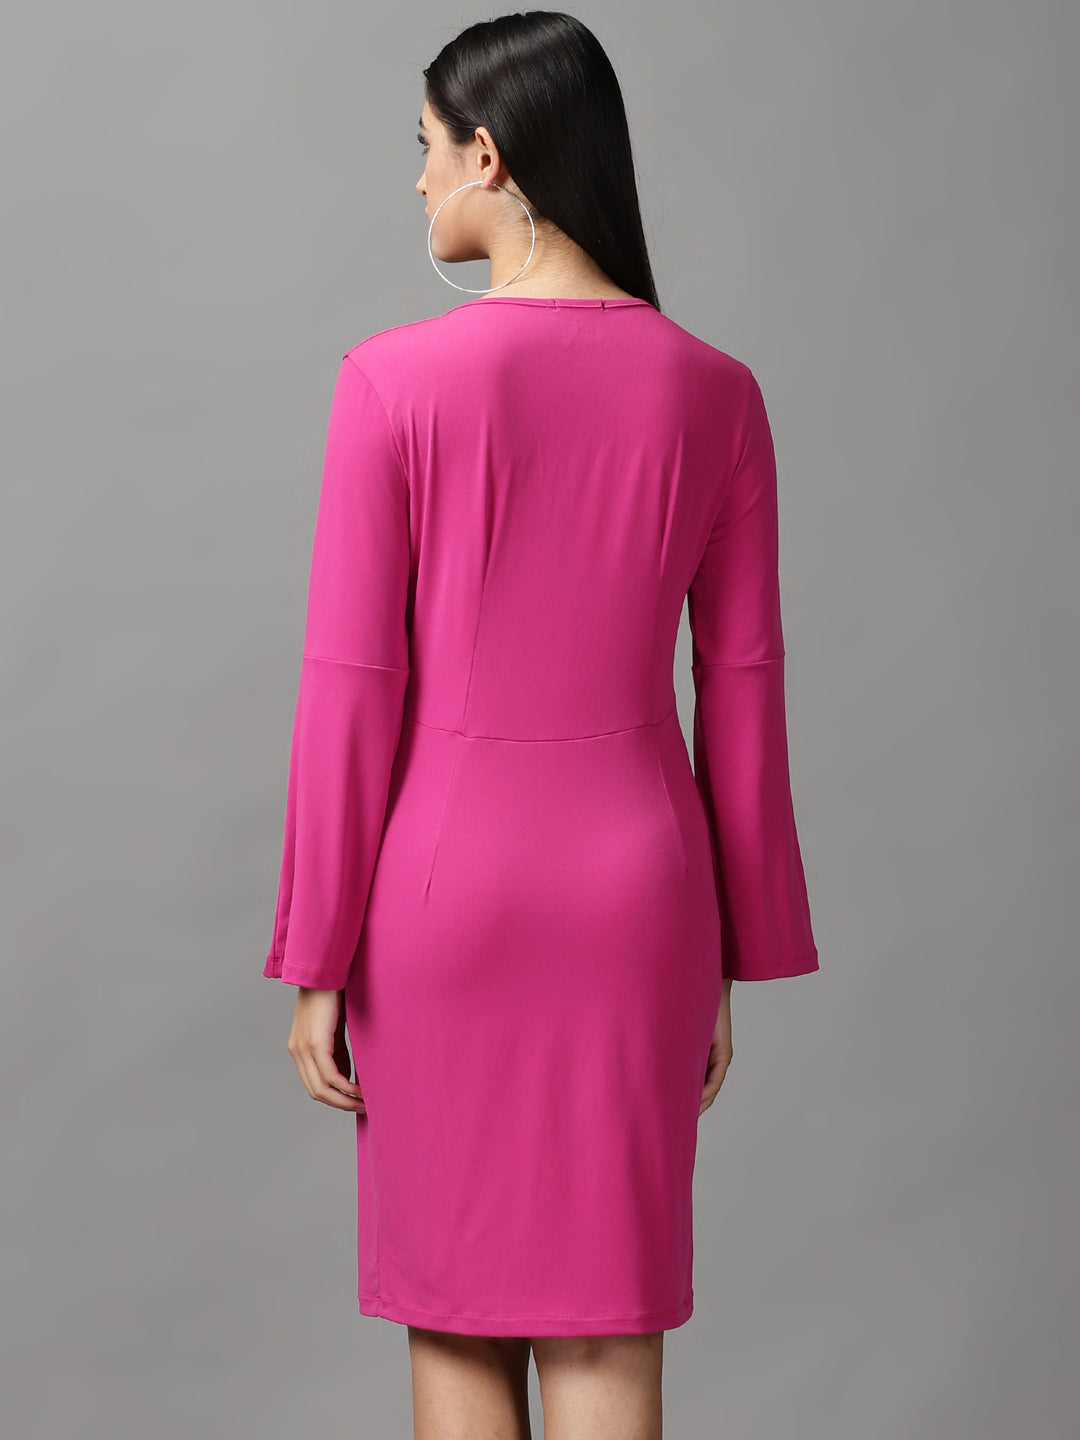 Women's Pink Solid Empire Dress